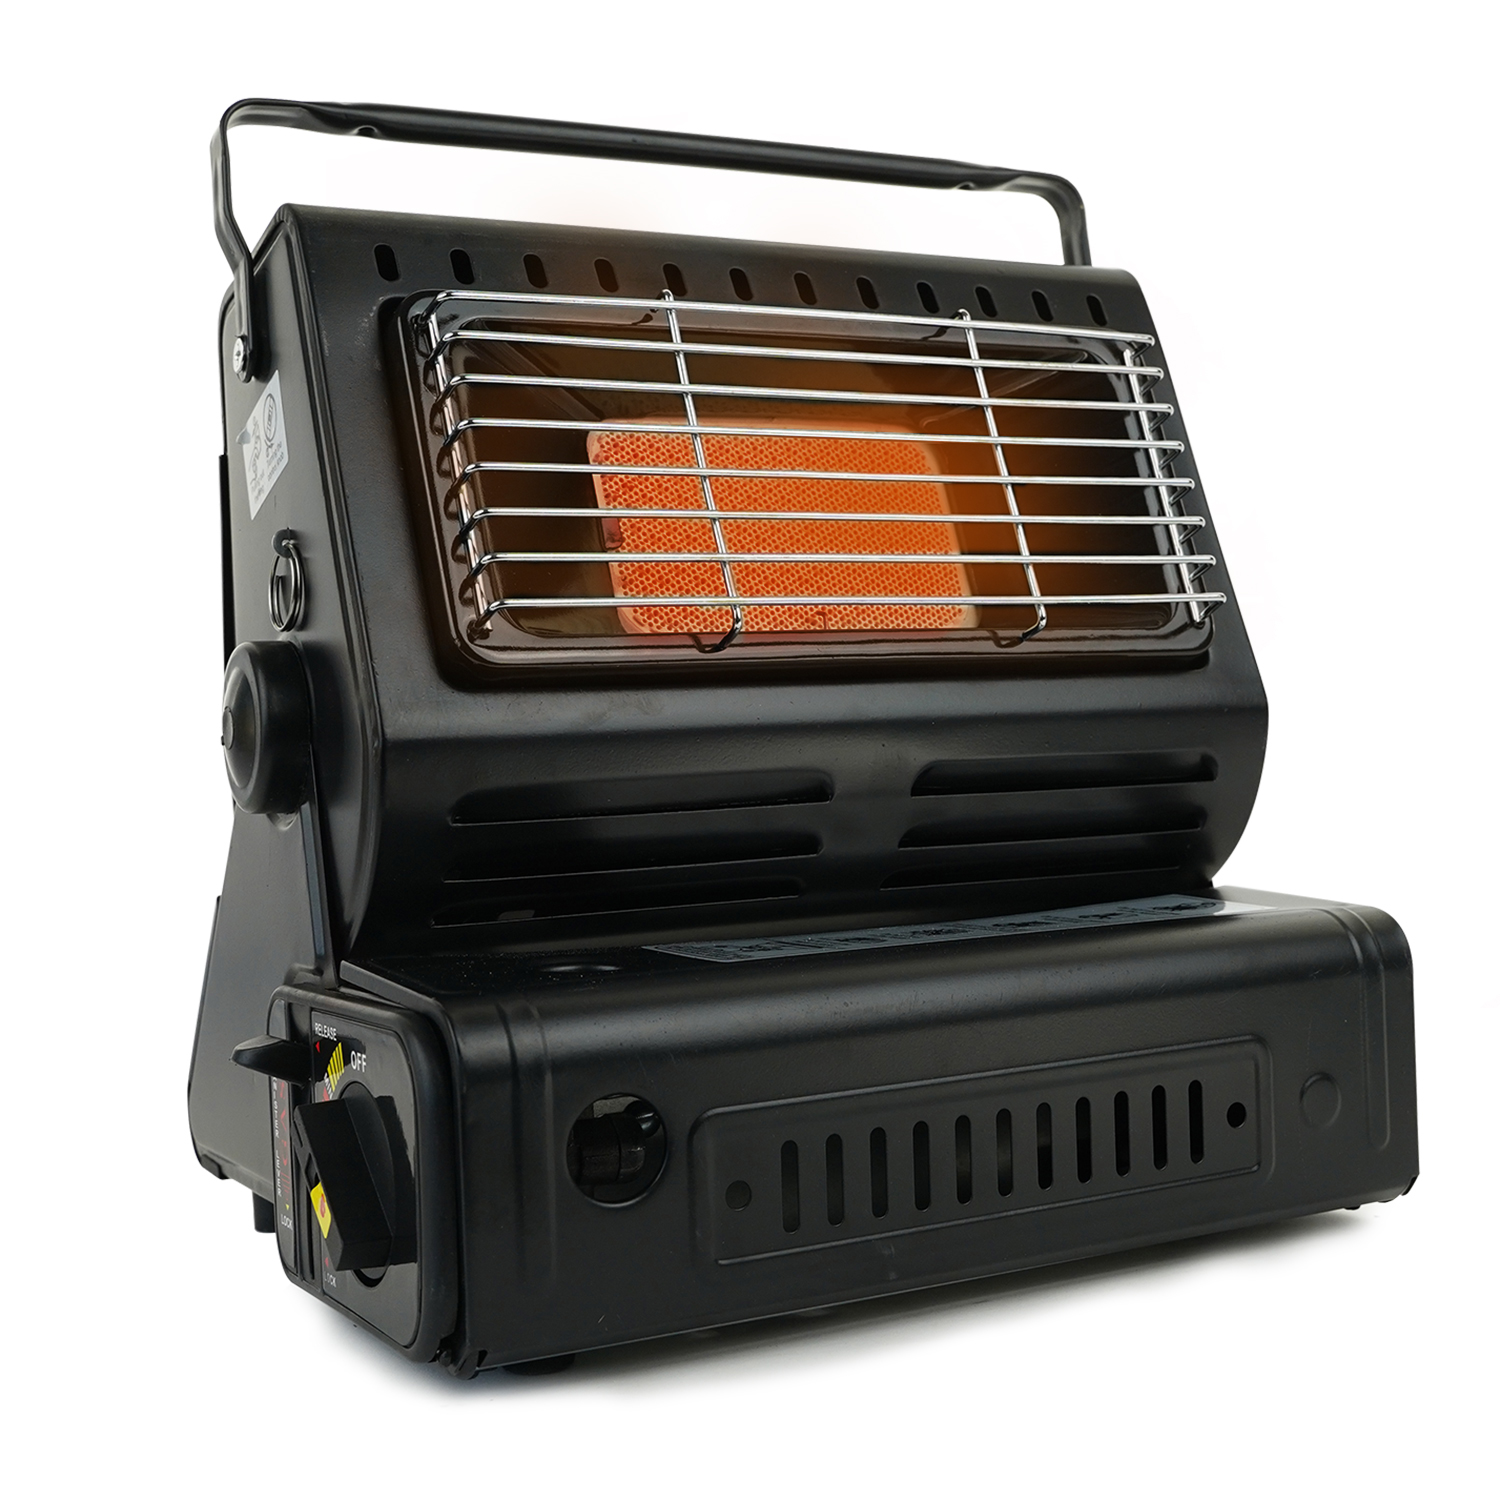  Eurocatch Gaskachel - Heater - Kacheltje - Terrasverwarmer - Verstelbaar - Draagbaar